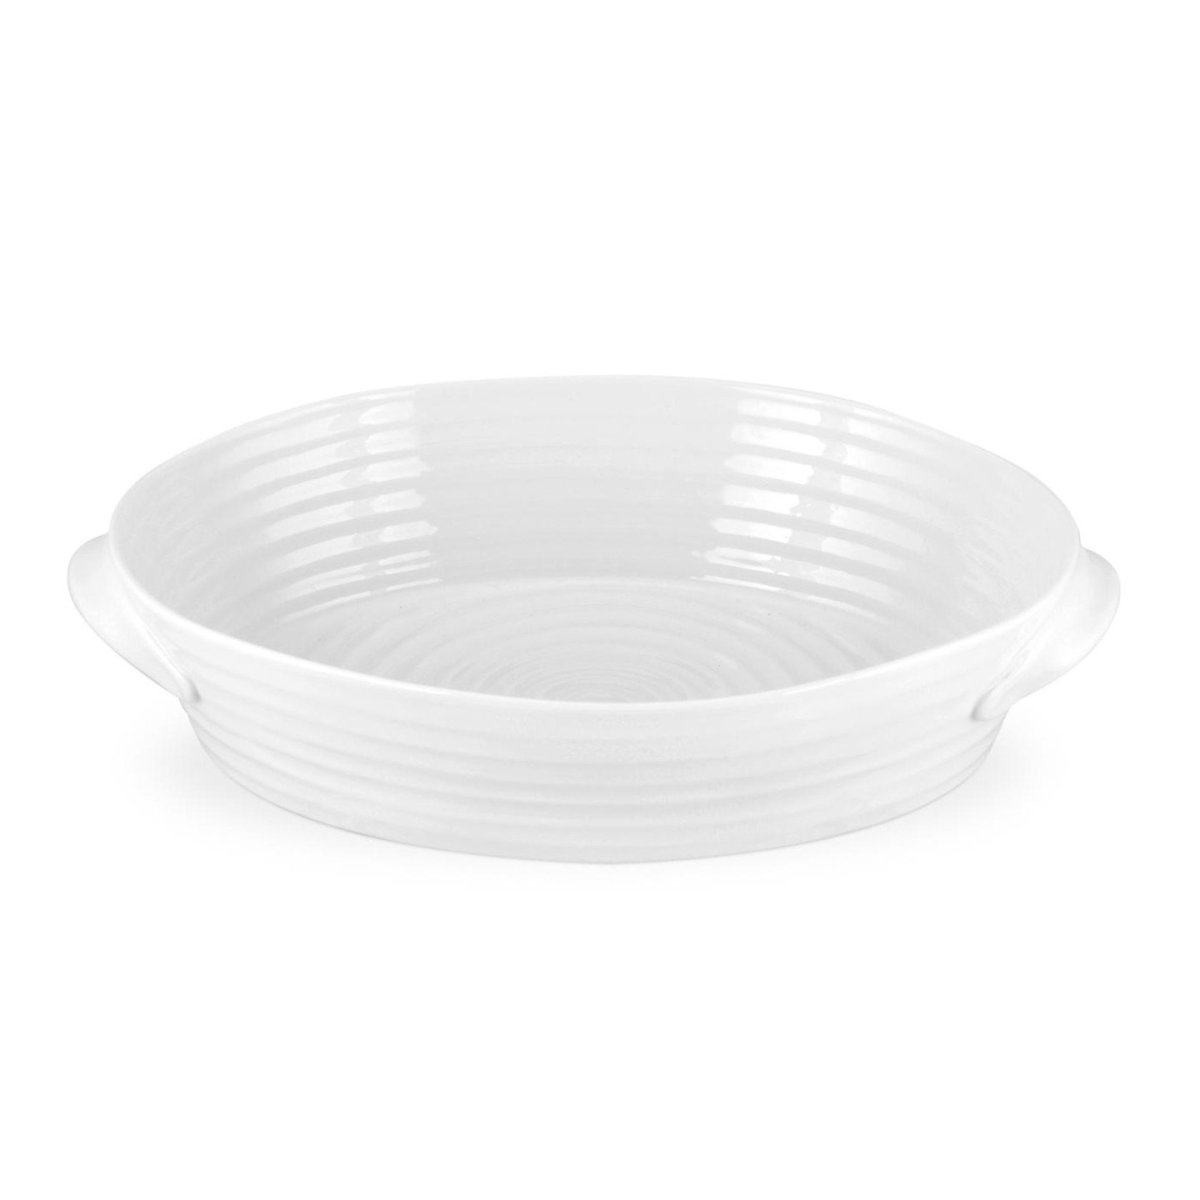 Portmeirion Sophie Conran Oval Roasting Dish 29.5cm x 20cm | Minimax